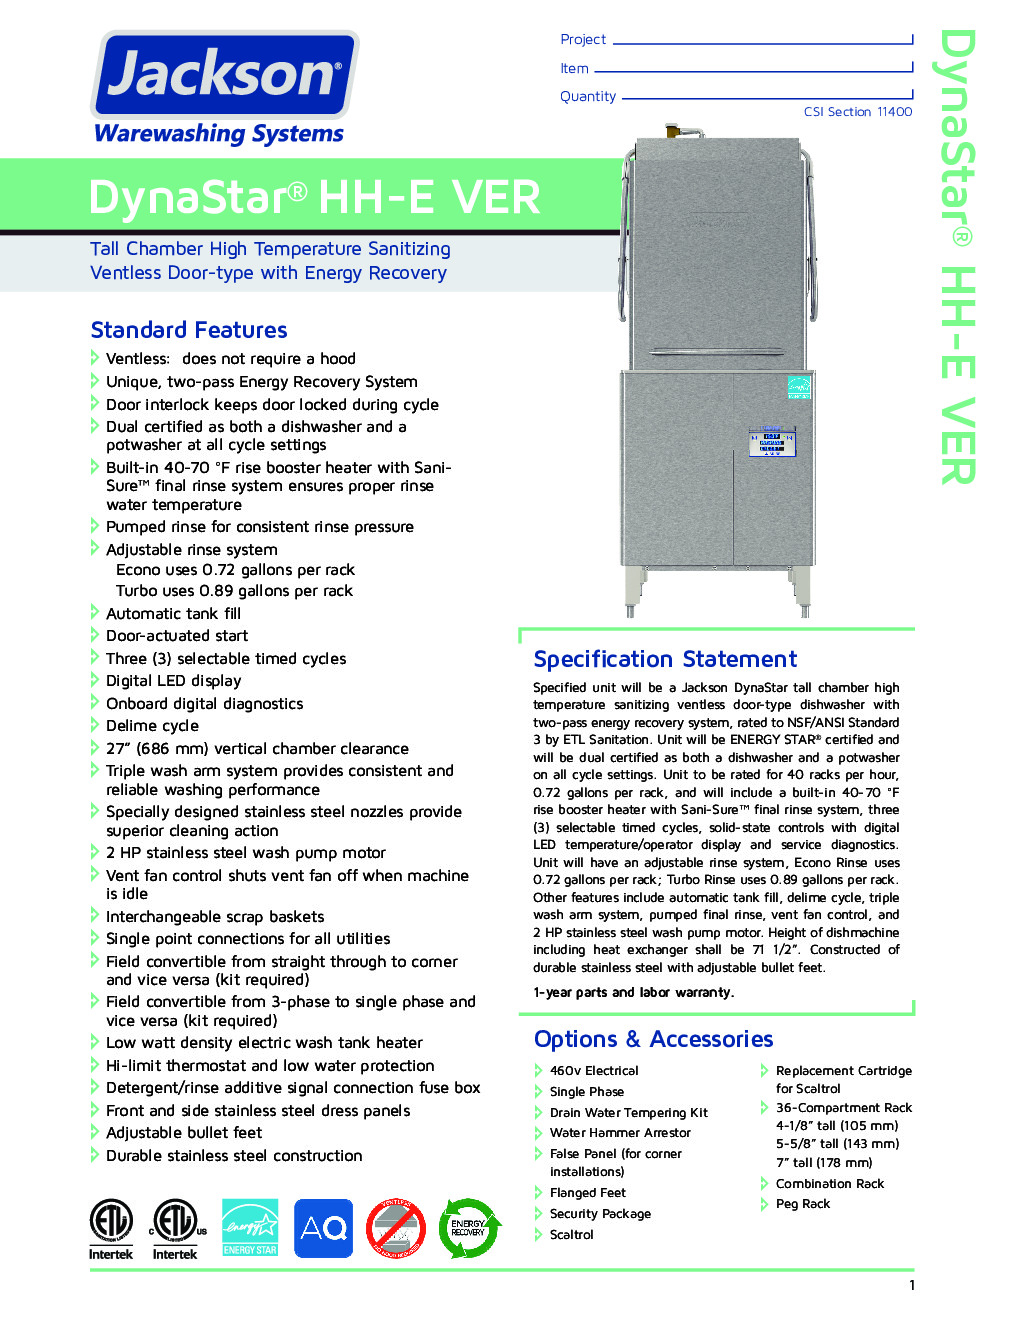 Jackson WWS DYNASTAR HH-E VENTLESS (VER) Ventless Door Type Dishwasher